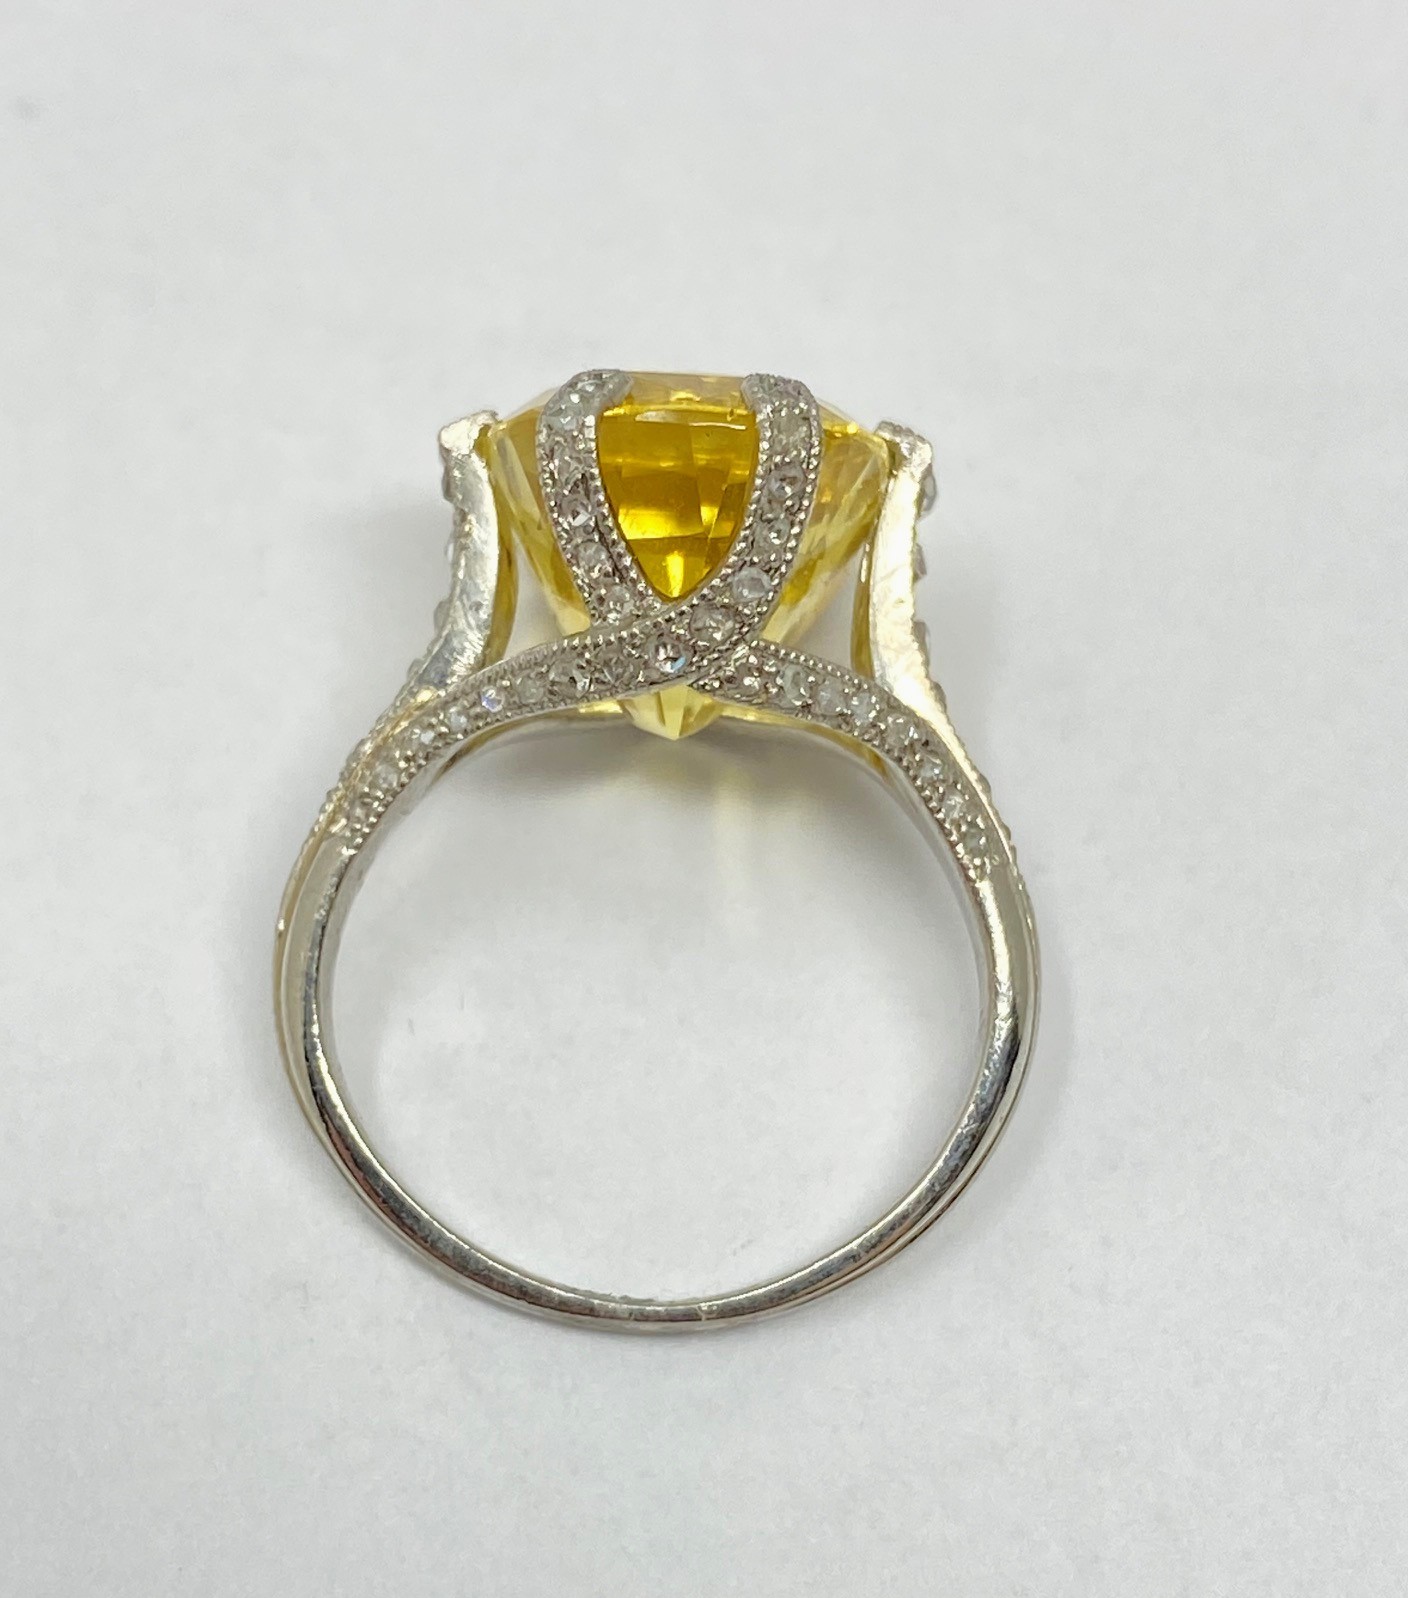 YELLOW SAPPHIRE AND DIAMOND RING - Image 3 of 6